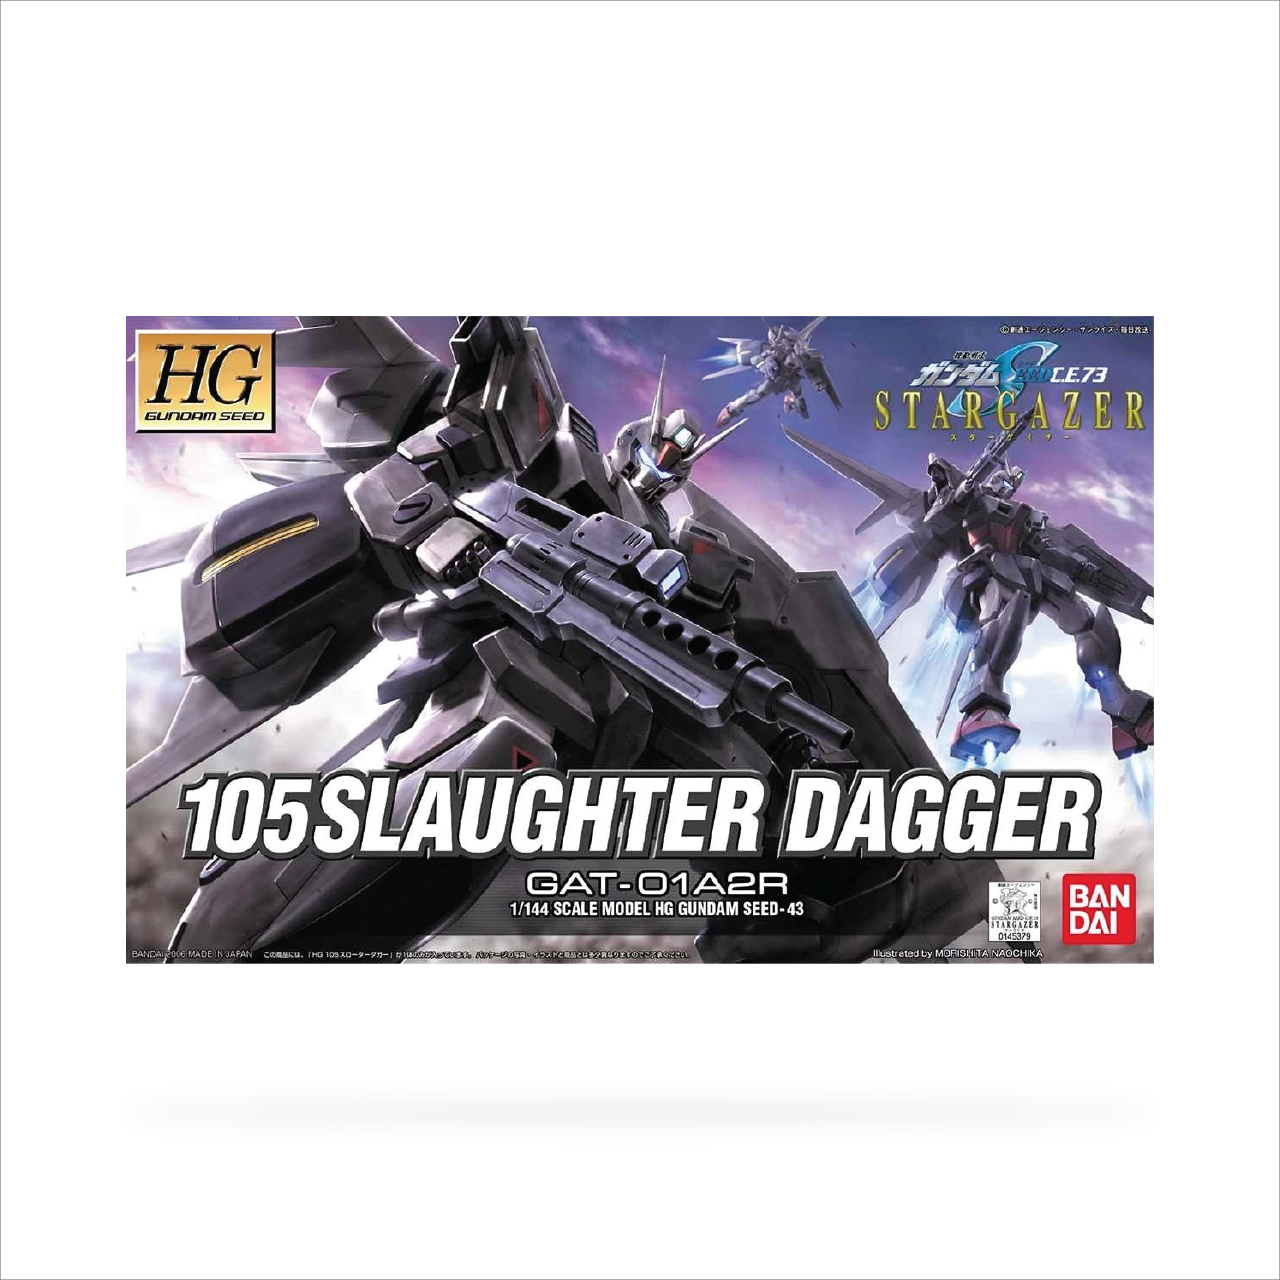 HG GAT-01A1 105 Slaughter Dagger